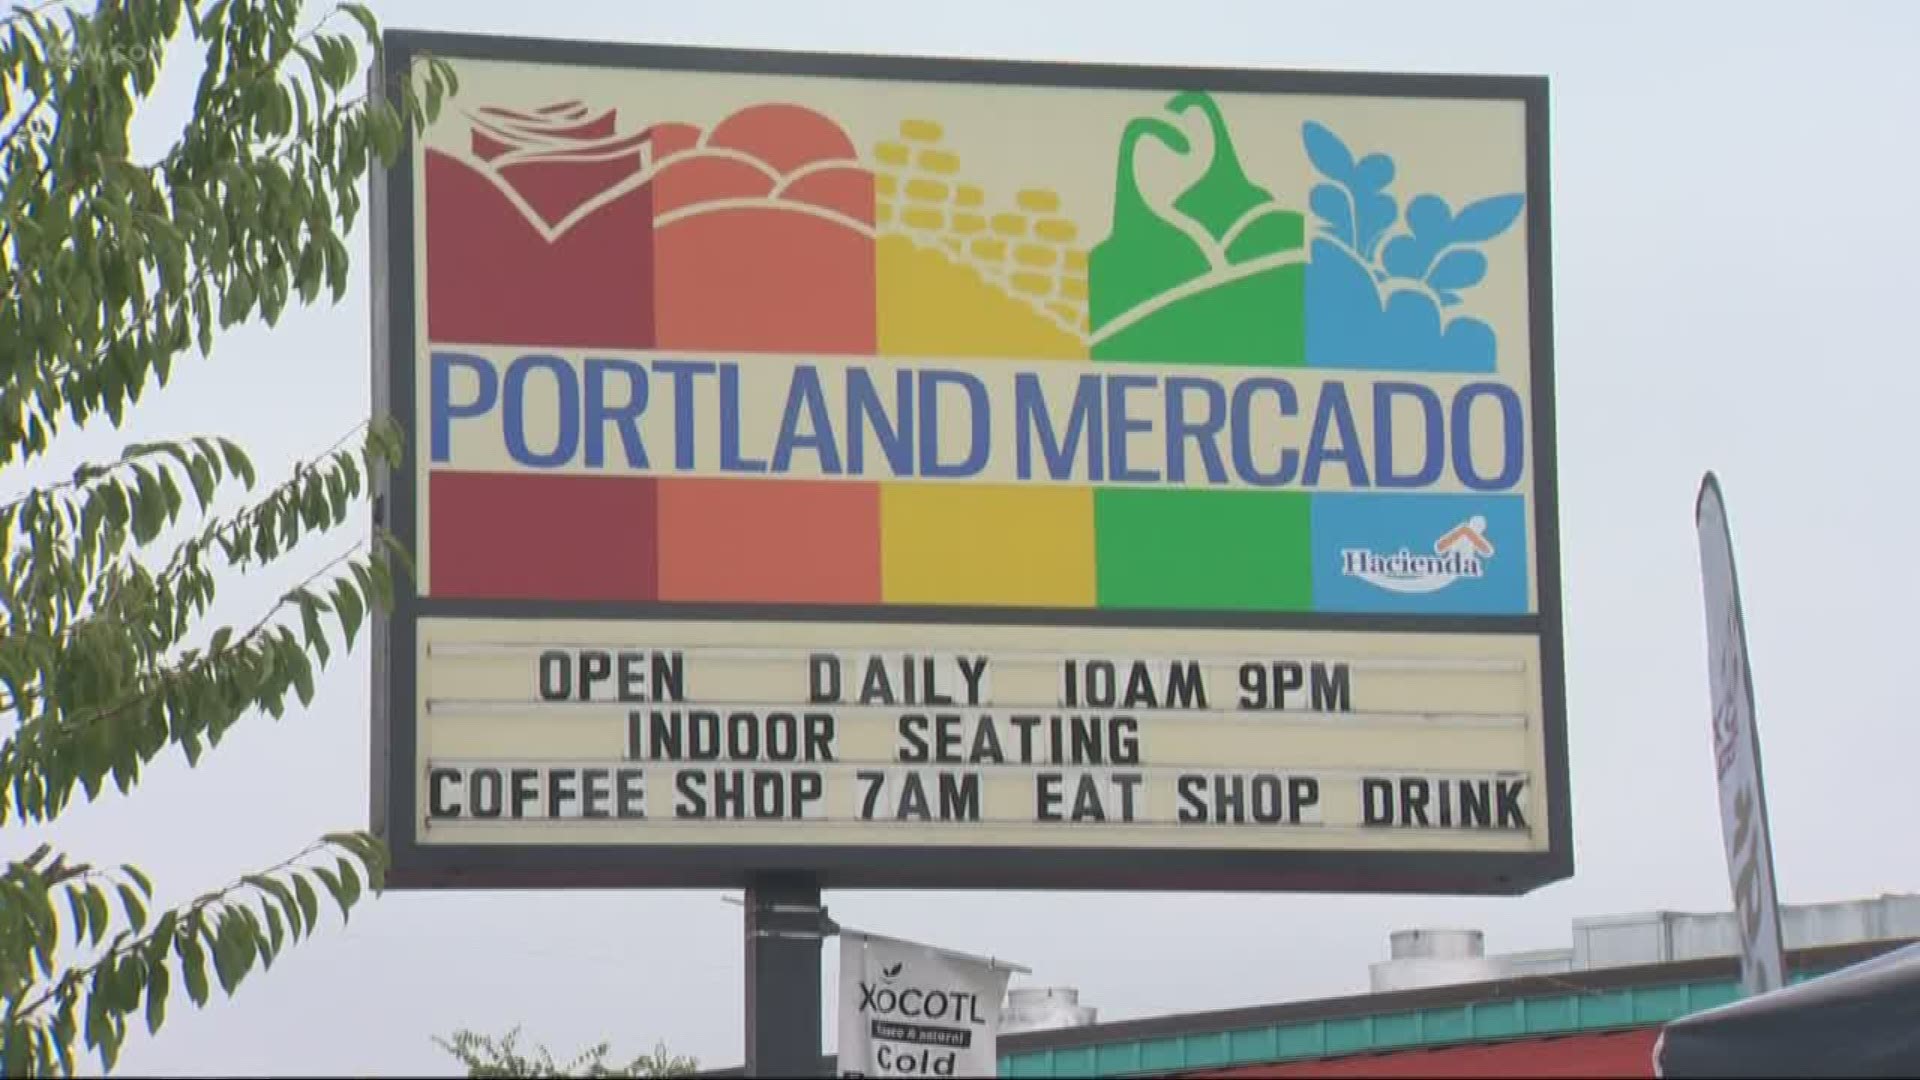 Days after a break-in, Portland Mercado hosts Taste of Latinoamérica.